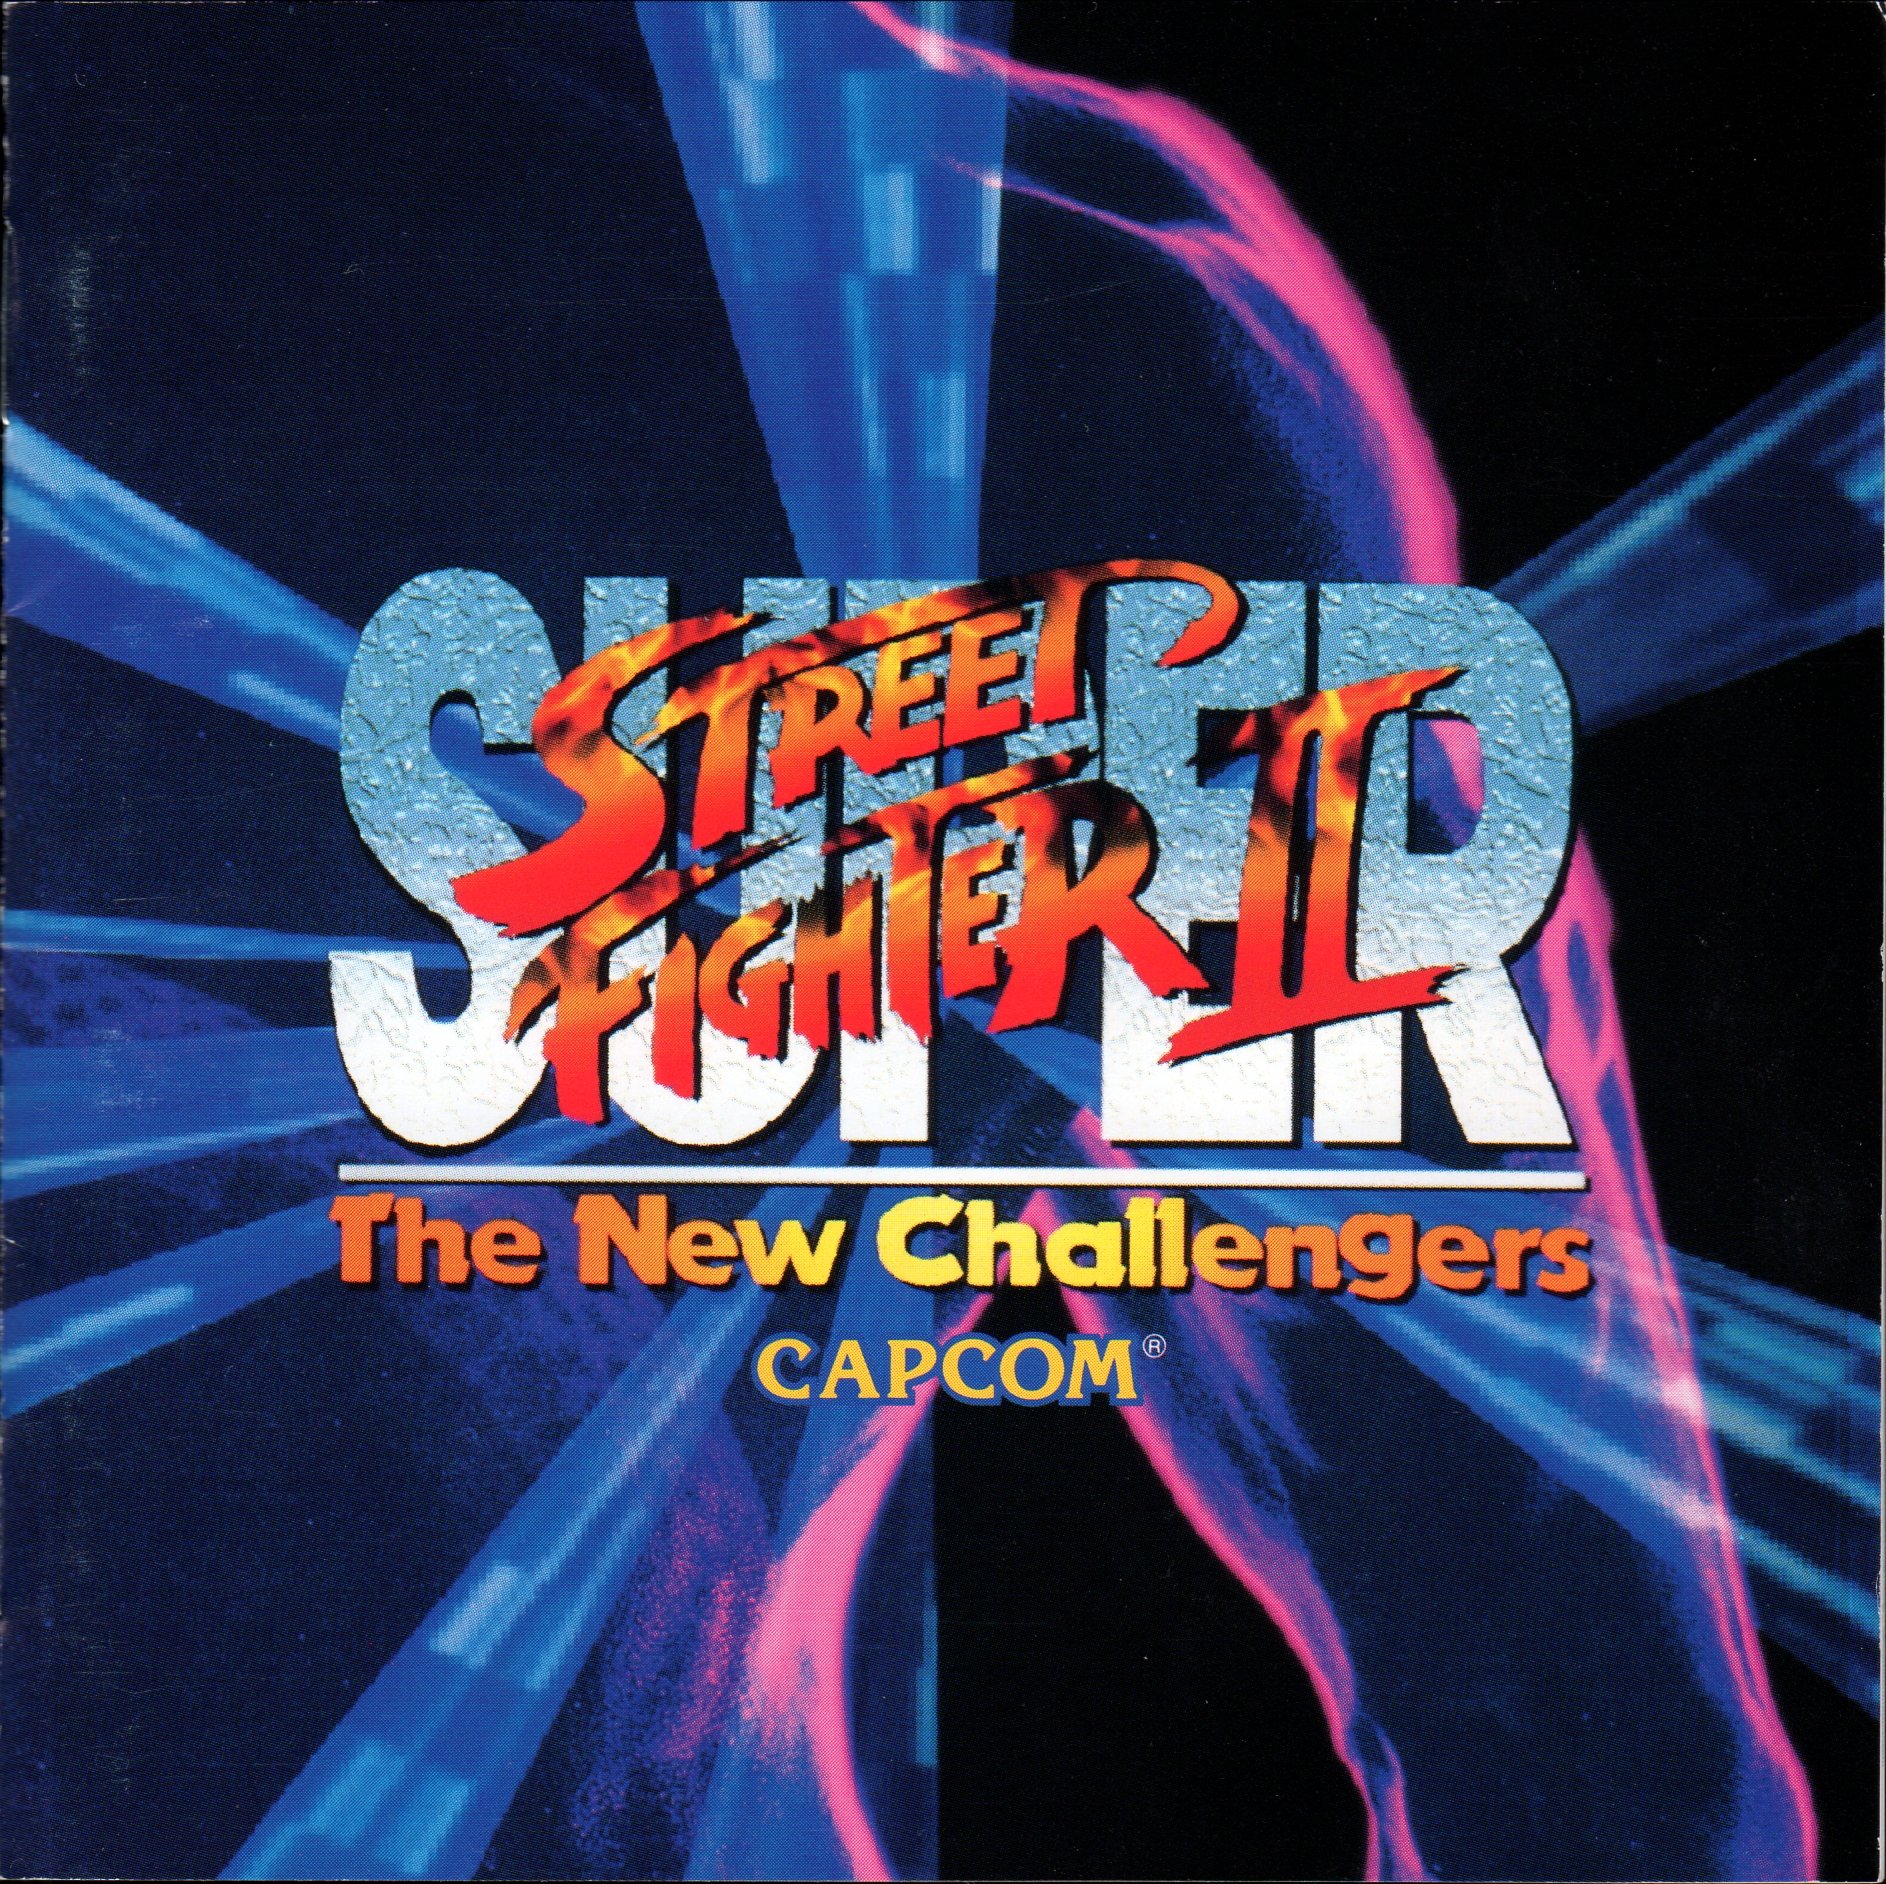 Super Street Fighter II OST Cammy Theme 